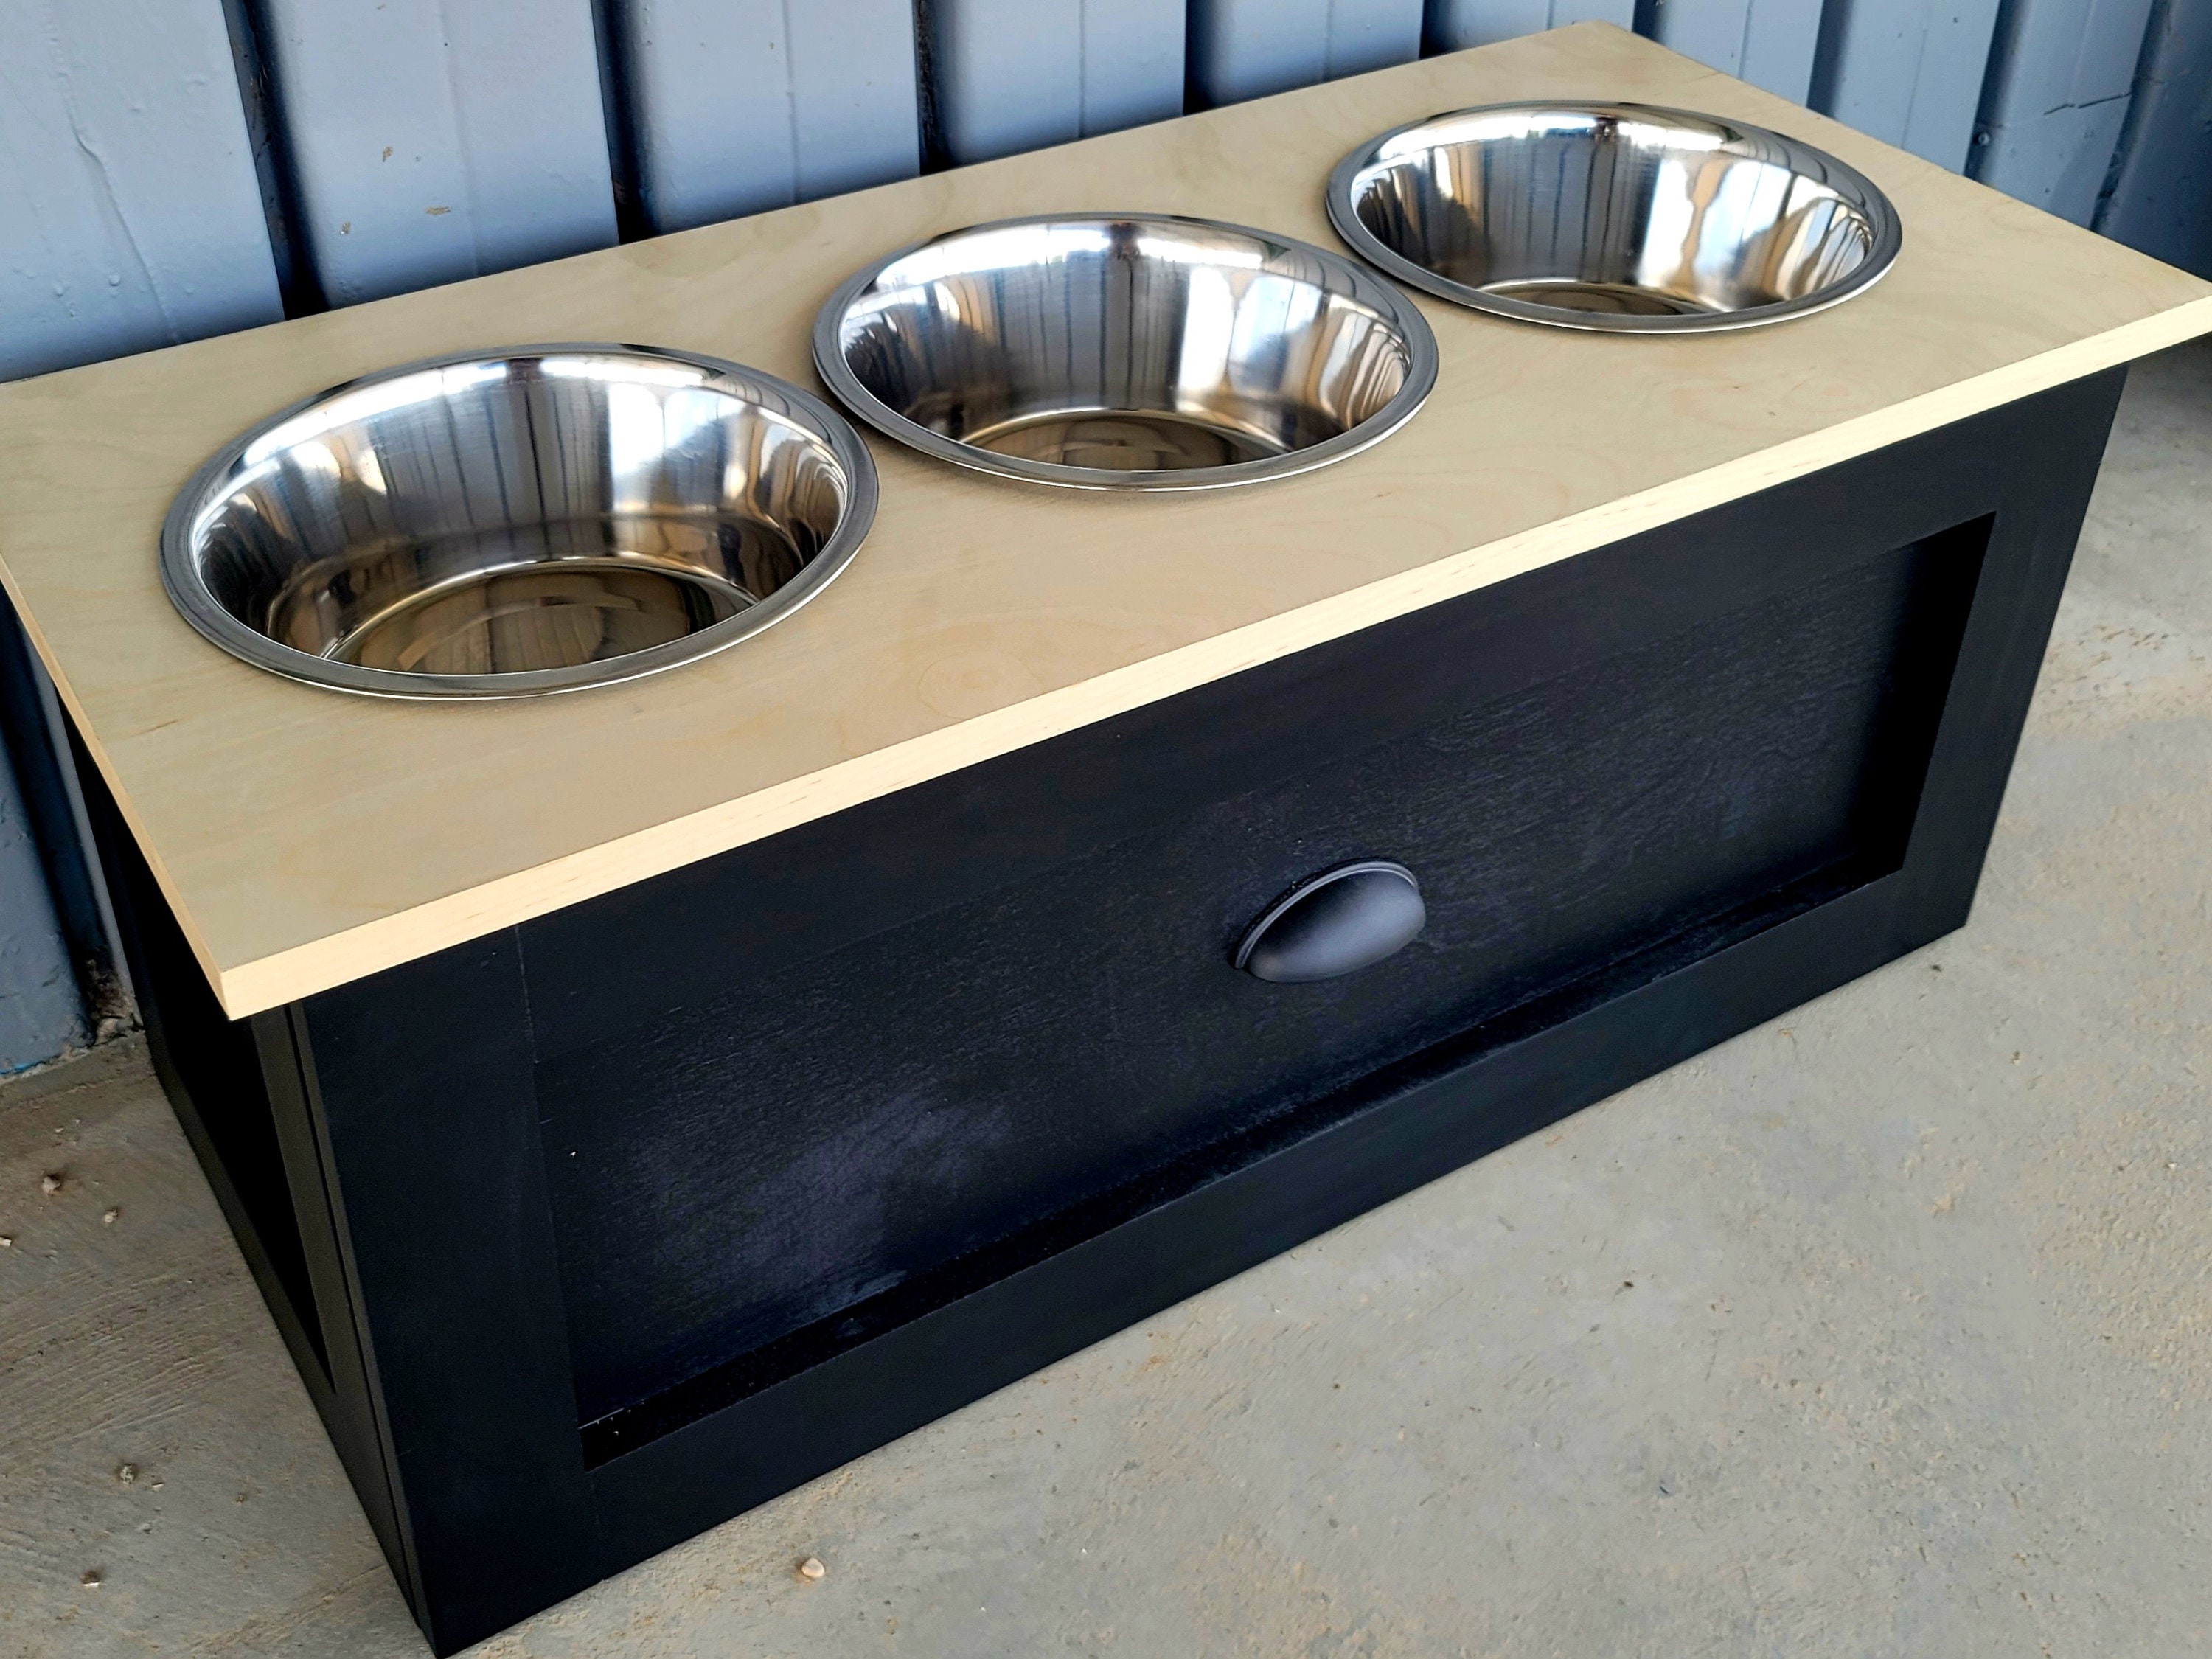 Reclaimed Pallet furniture Dog Bowl Feeding station – Rustic